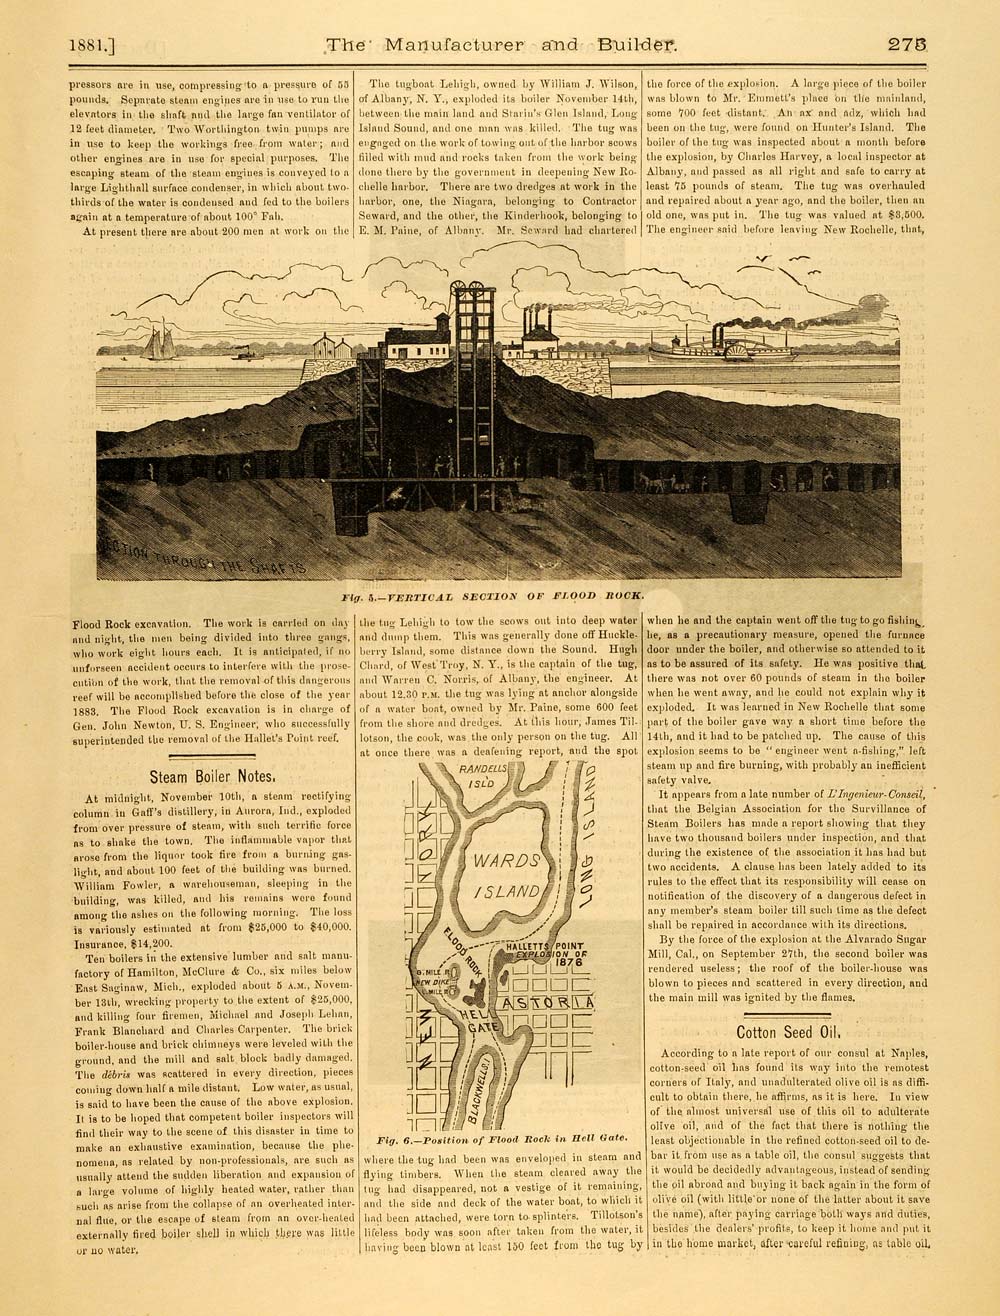 1881 Article Flood Rock Excavation Explosion Hell Gate New York Harbor Reef MAB1